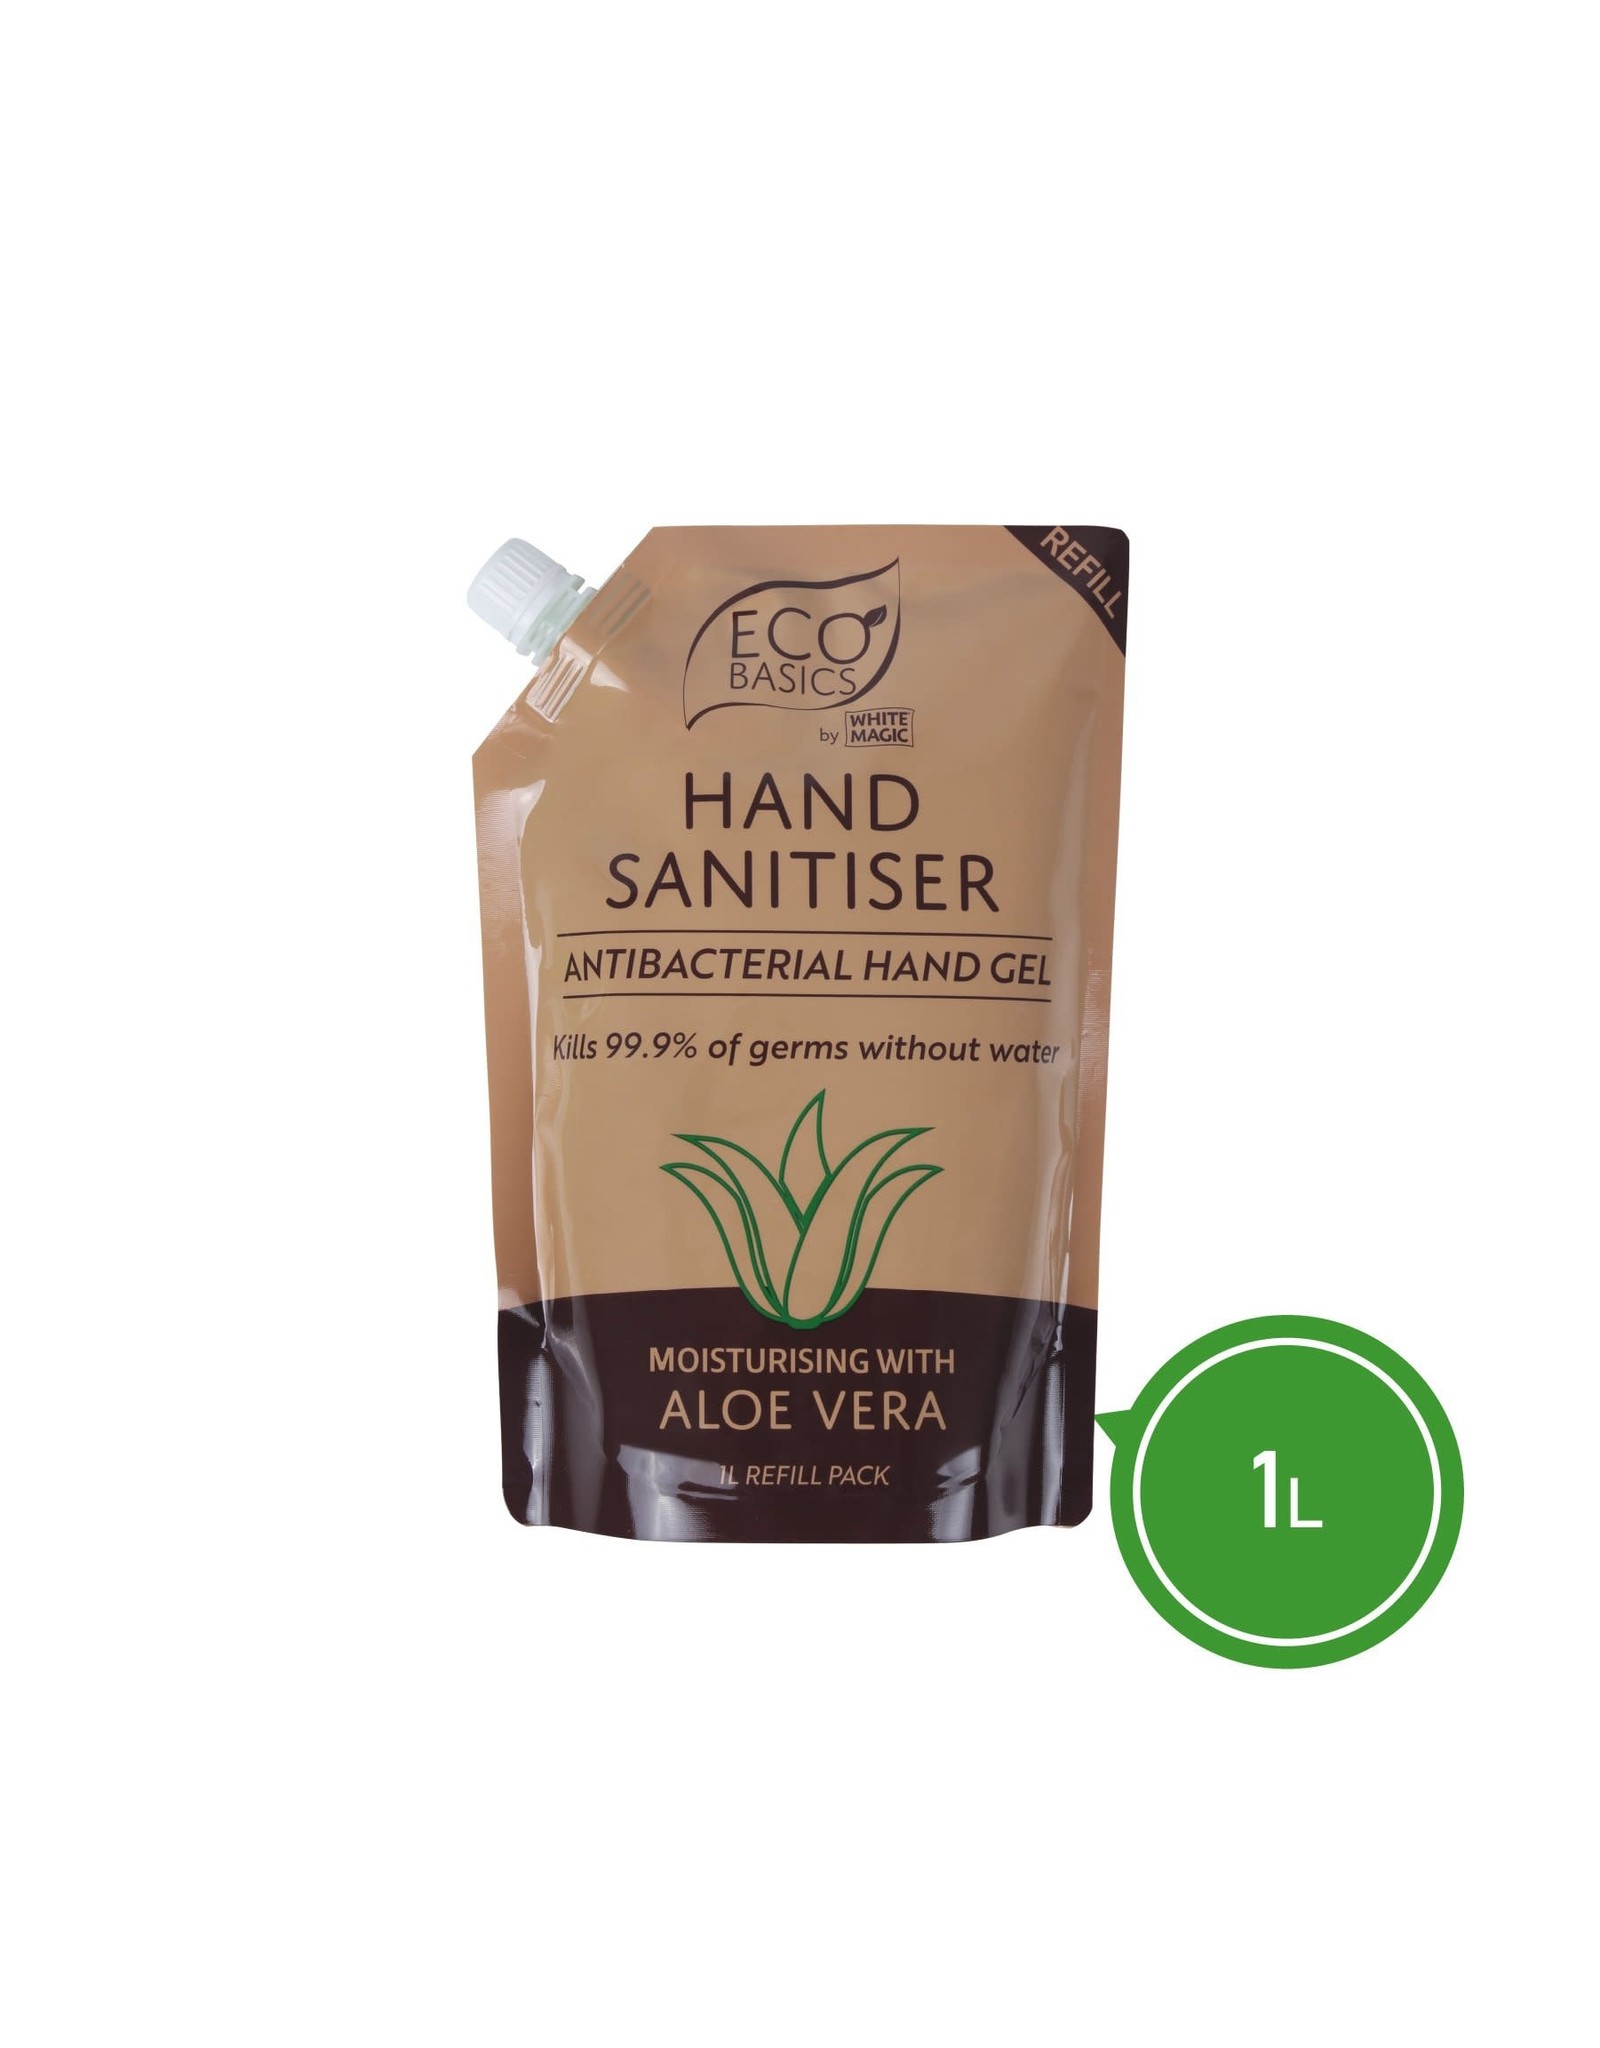 Eco Basics Hand Sanitiser - Antibacterial Hand Gel with Aloe Vera